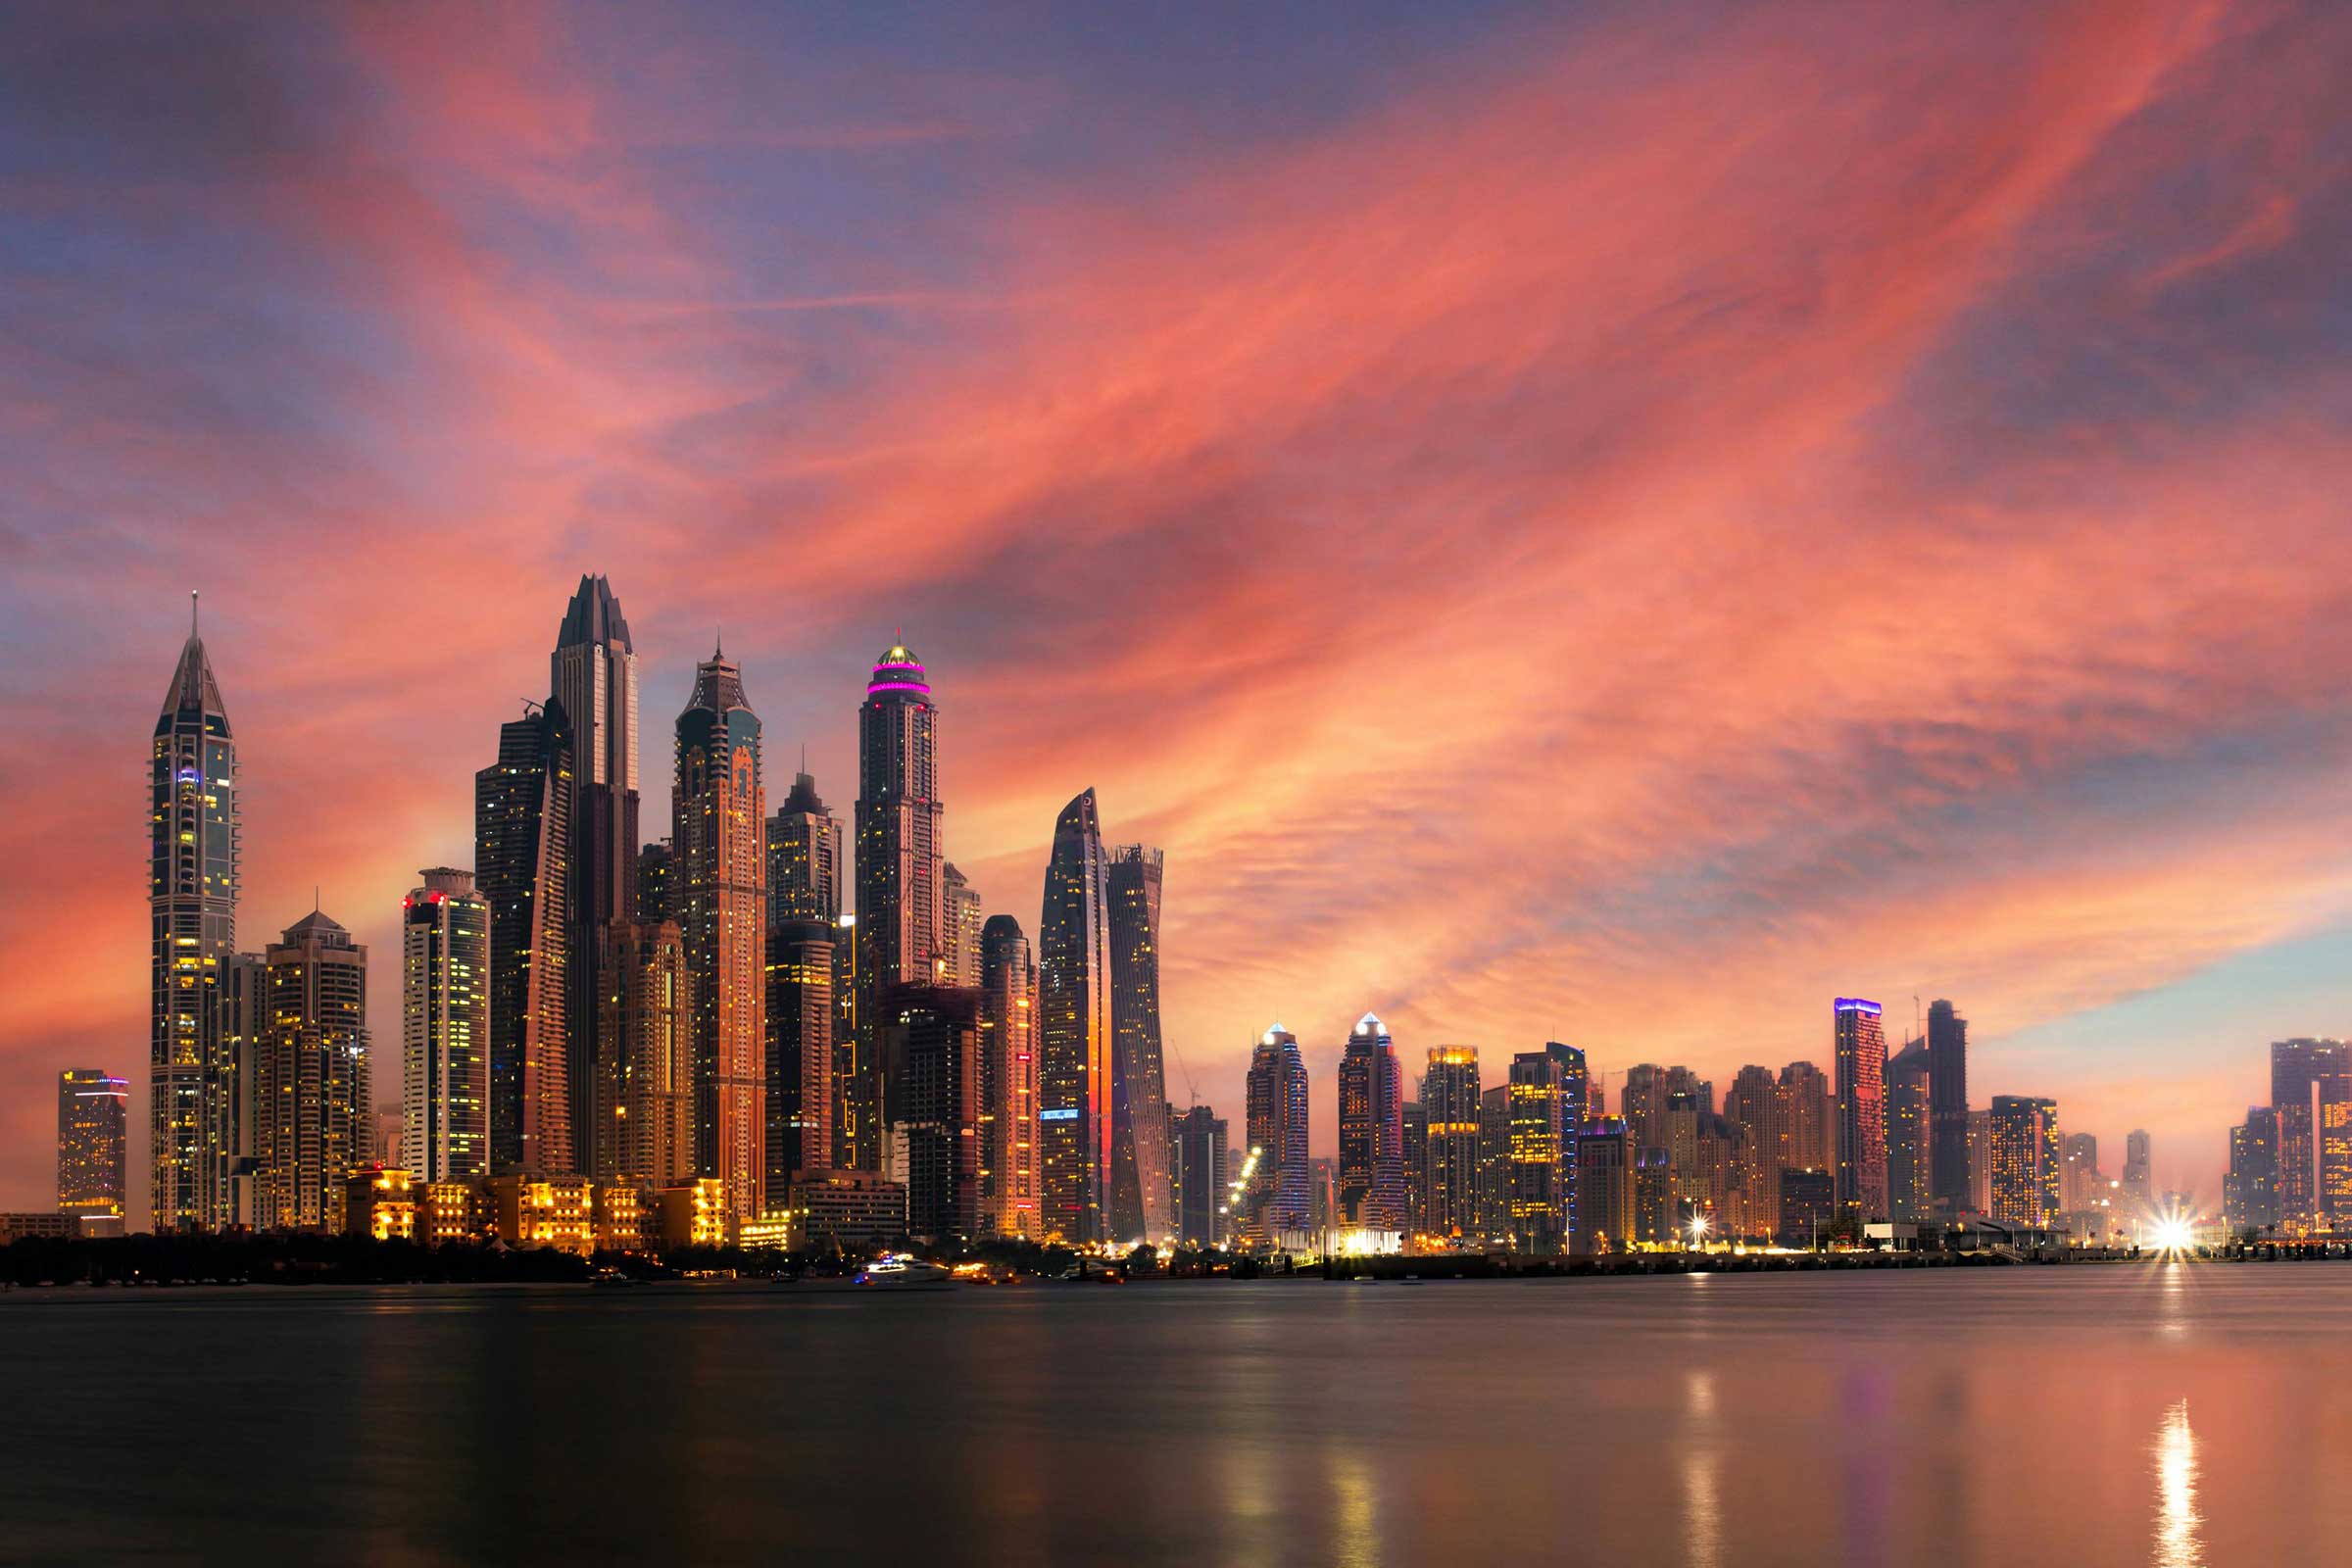 Dubai skyline at night - taken by Aleksandar Pasaric